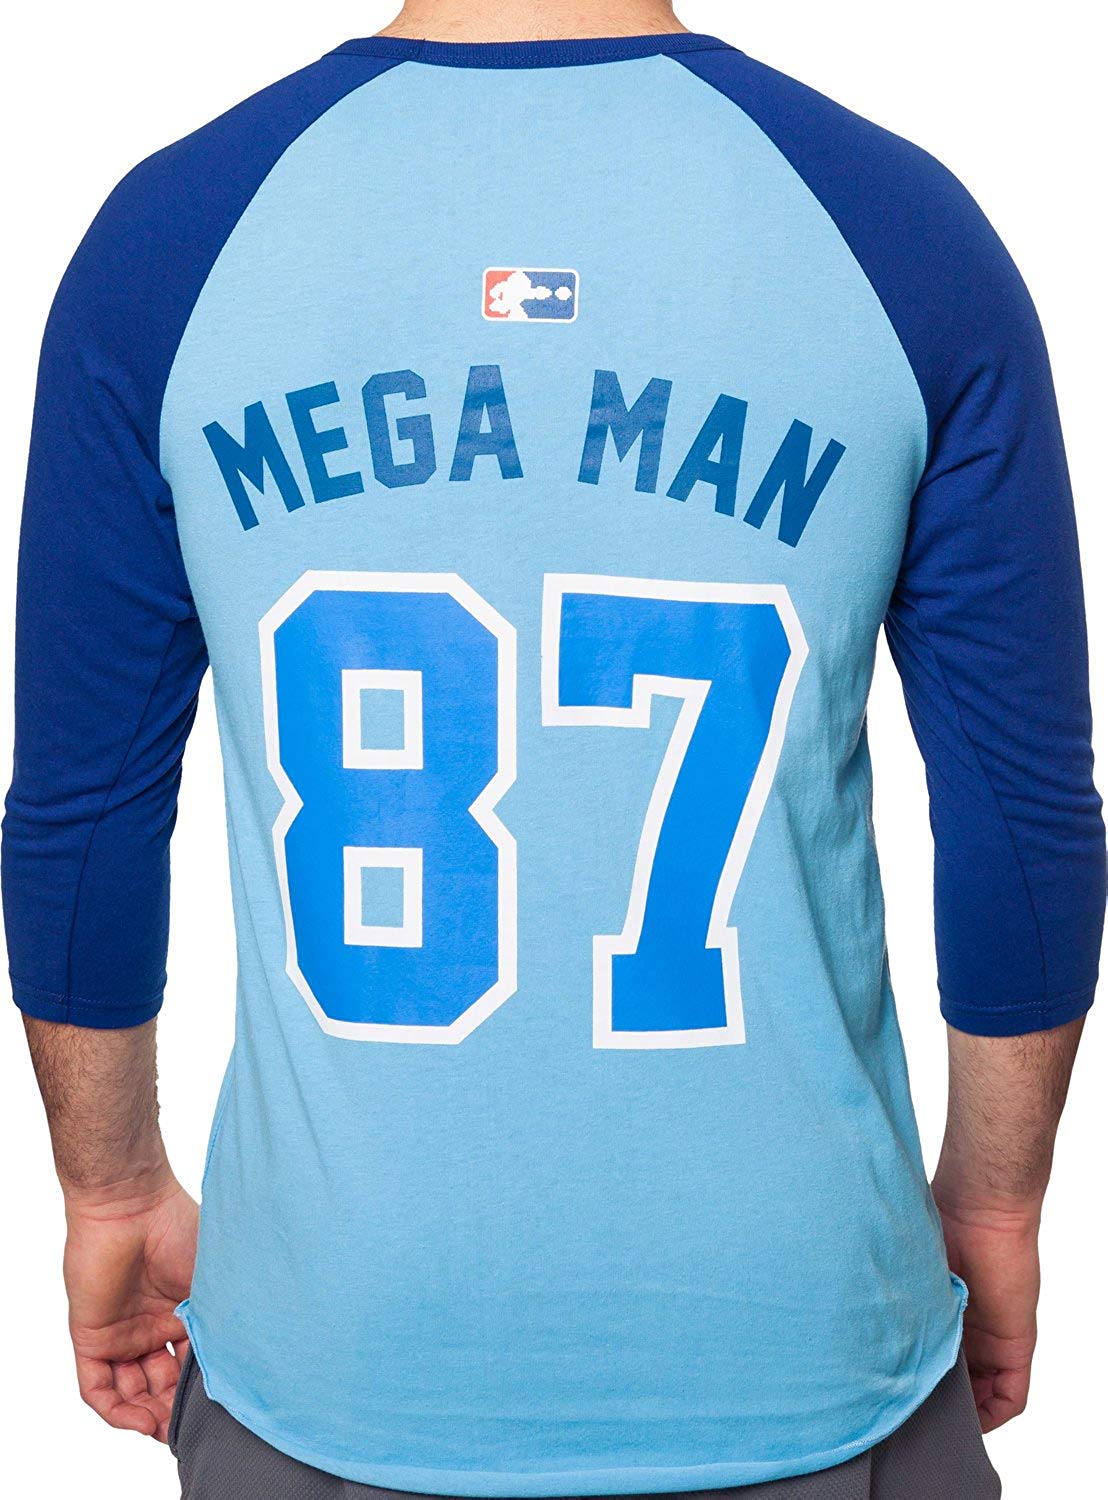 Mens Blue Mega Man Blue Bombers Pixel Baseball Sleeve Tee T Shirt - Rex Distributor, Inc ...